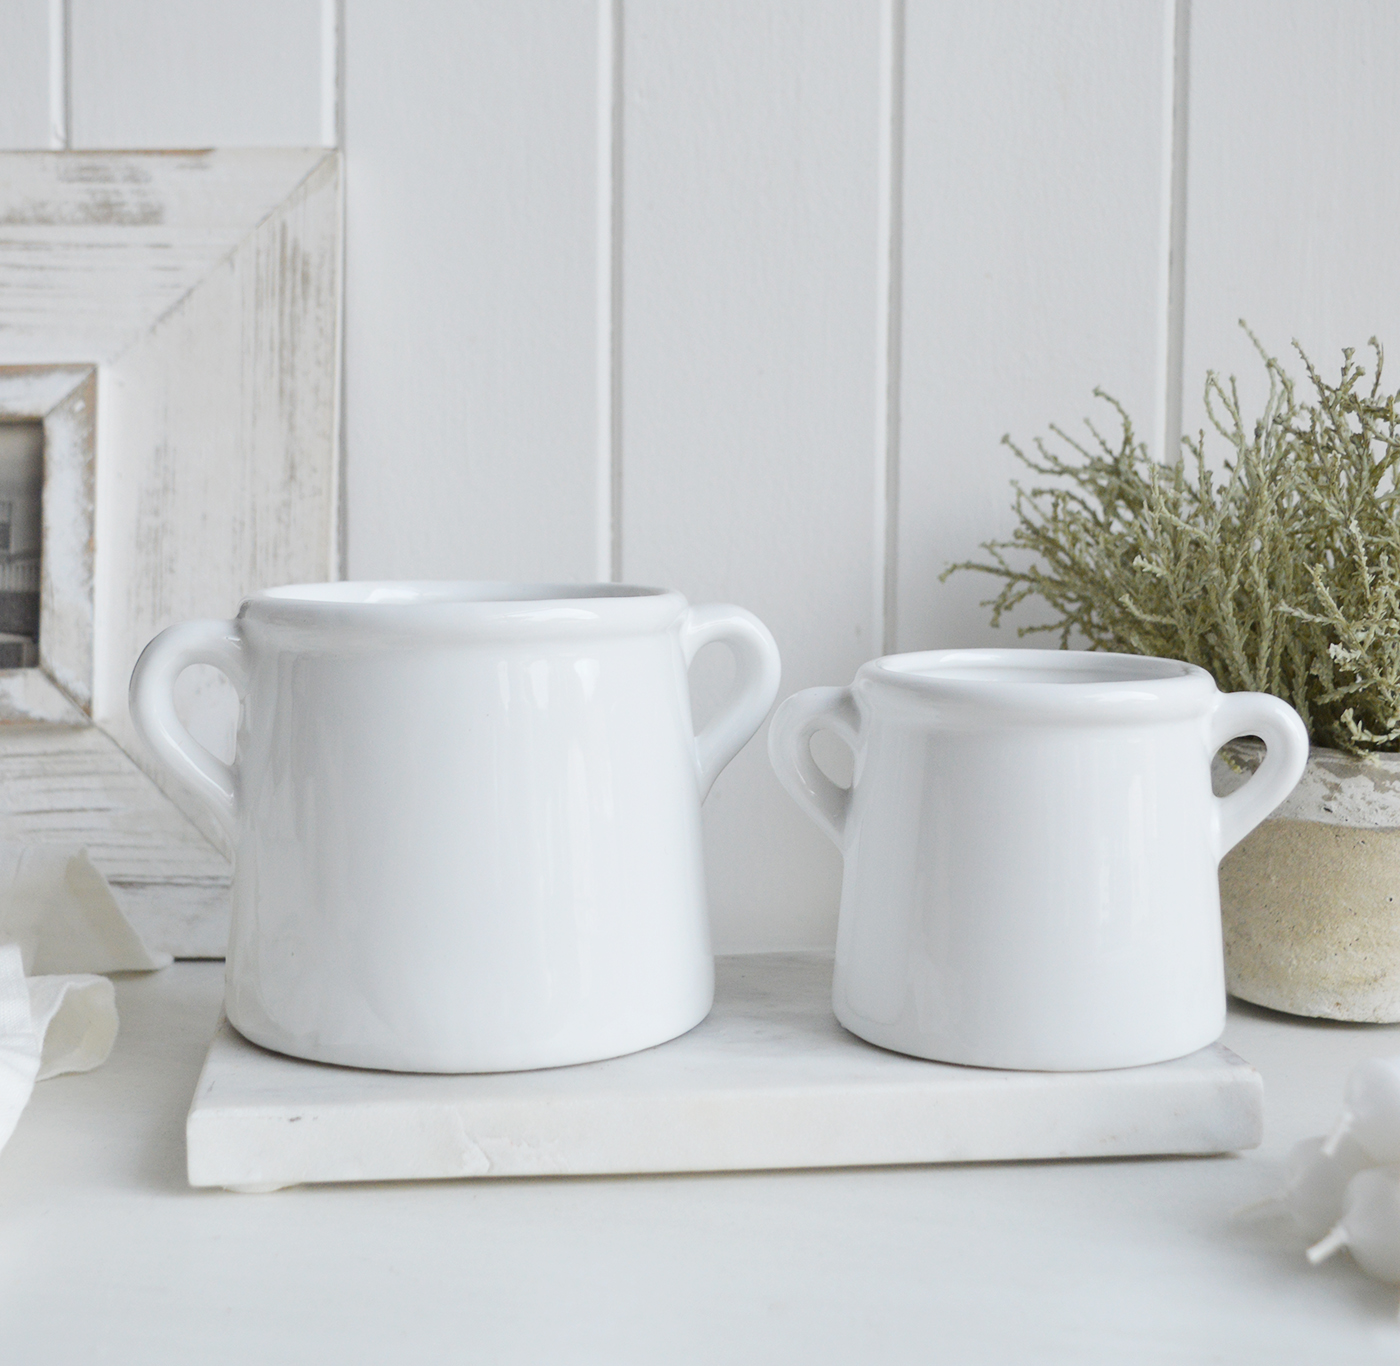 Castine White Ceramic Pots - White Interiors and Home Decor for modern country homes